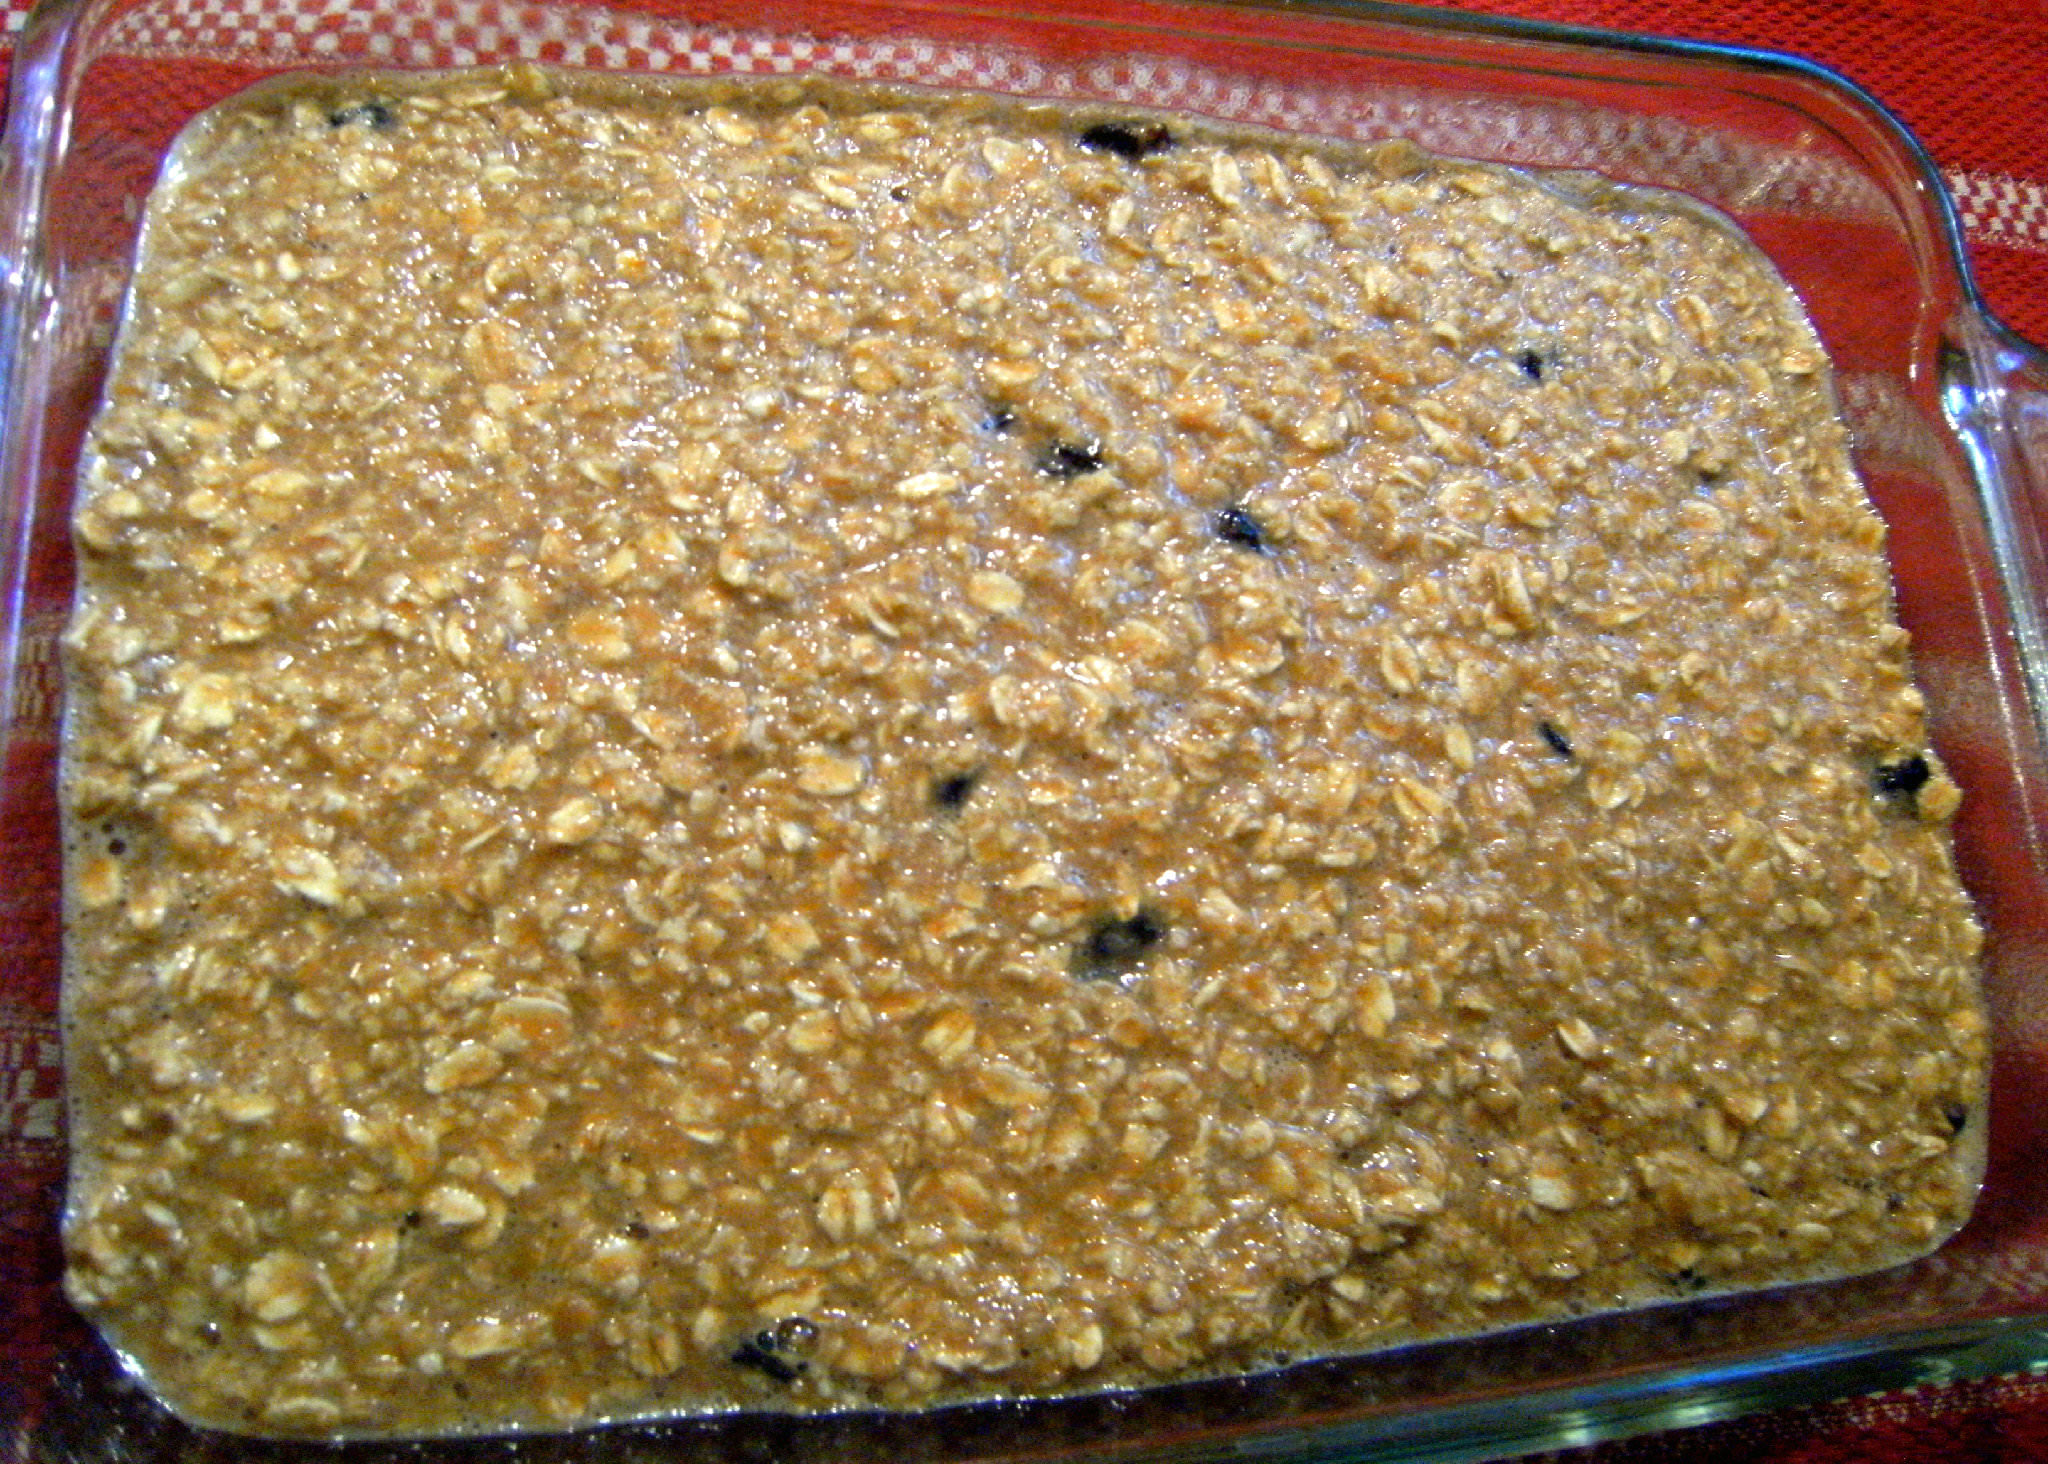 baked oatmeal recipe, ready for baking